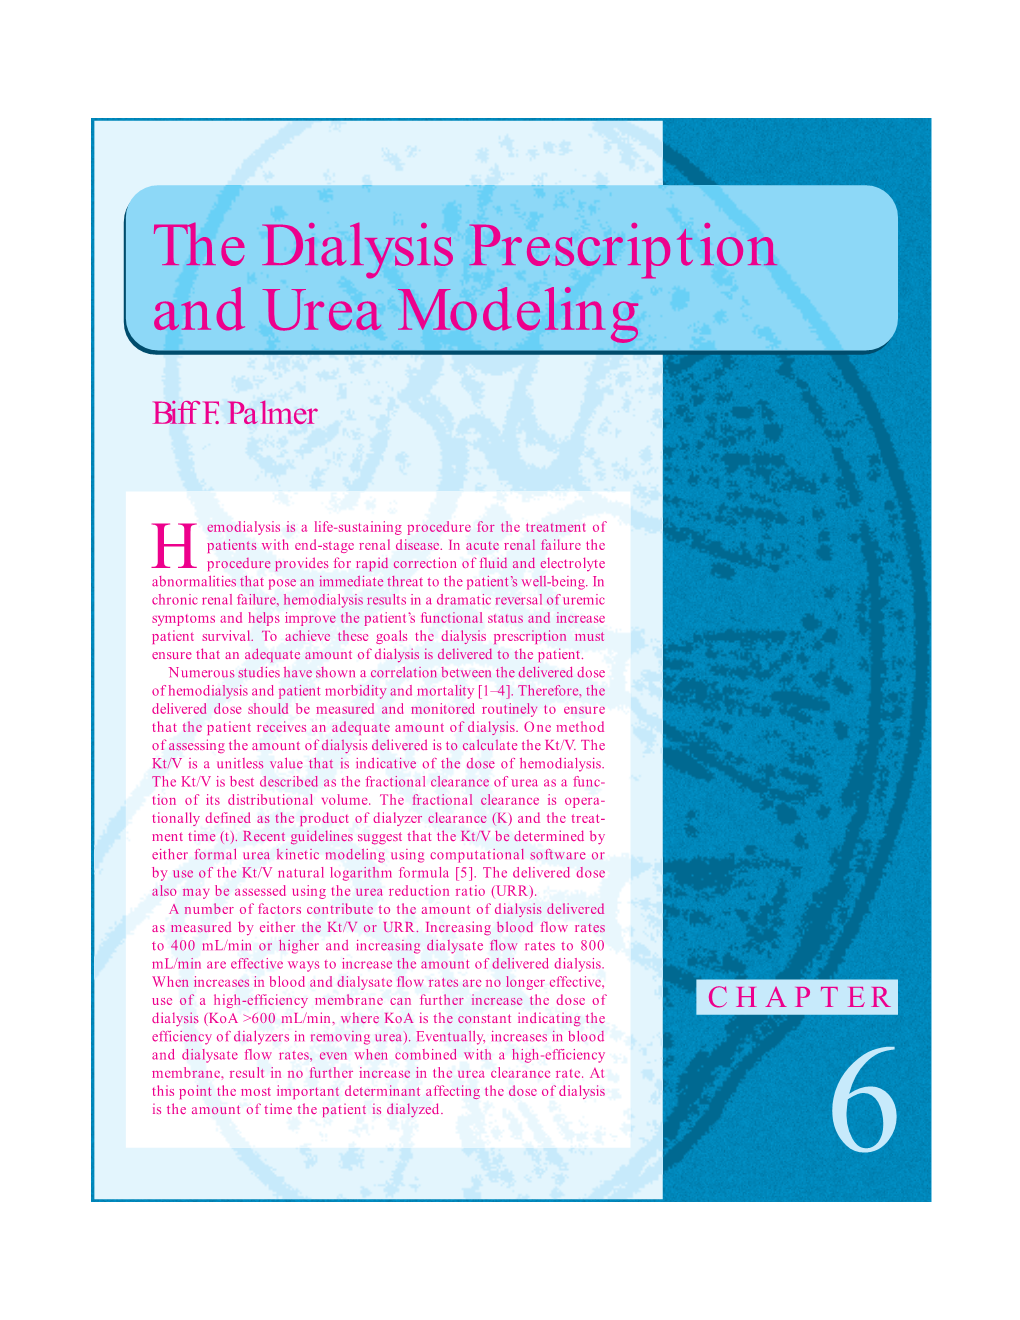 The Dialysis Prescription and Urea Modeling